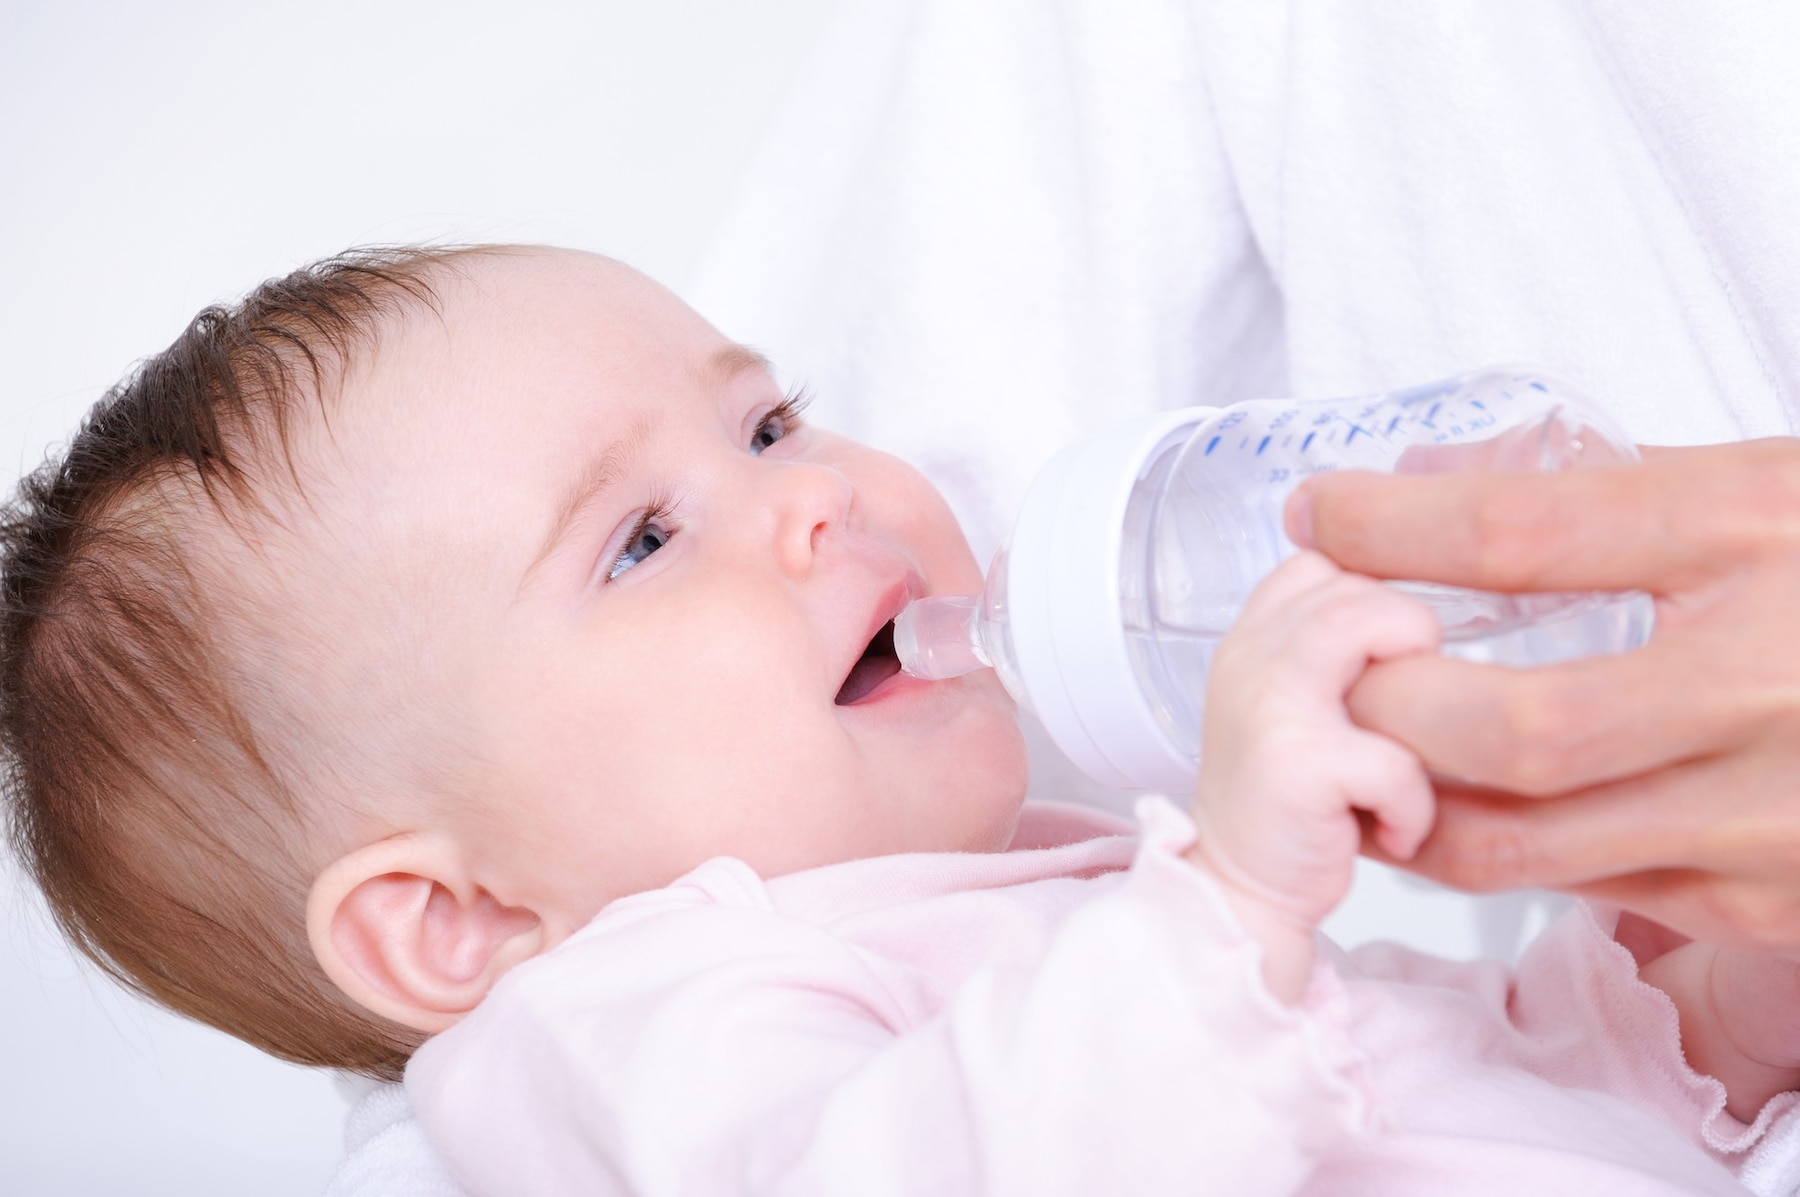 little-baby-drinking-milk-from-bottle_186202-85.jpg